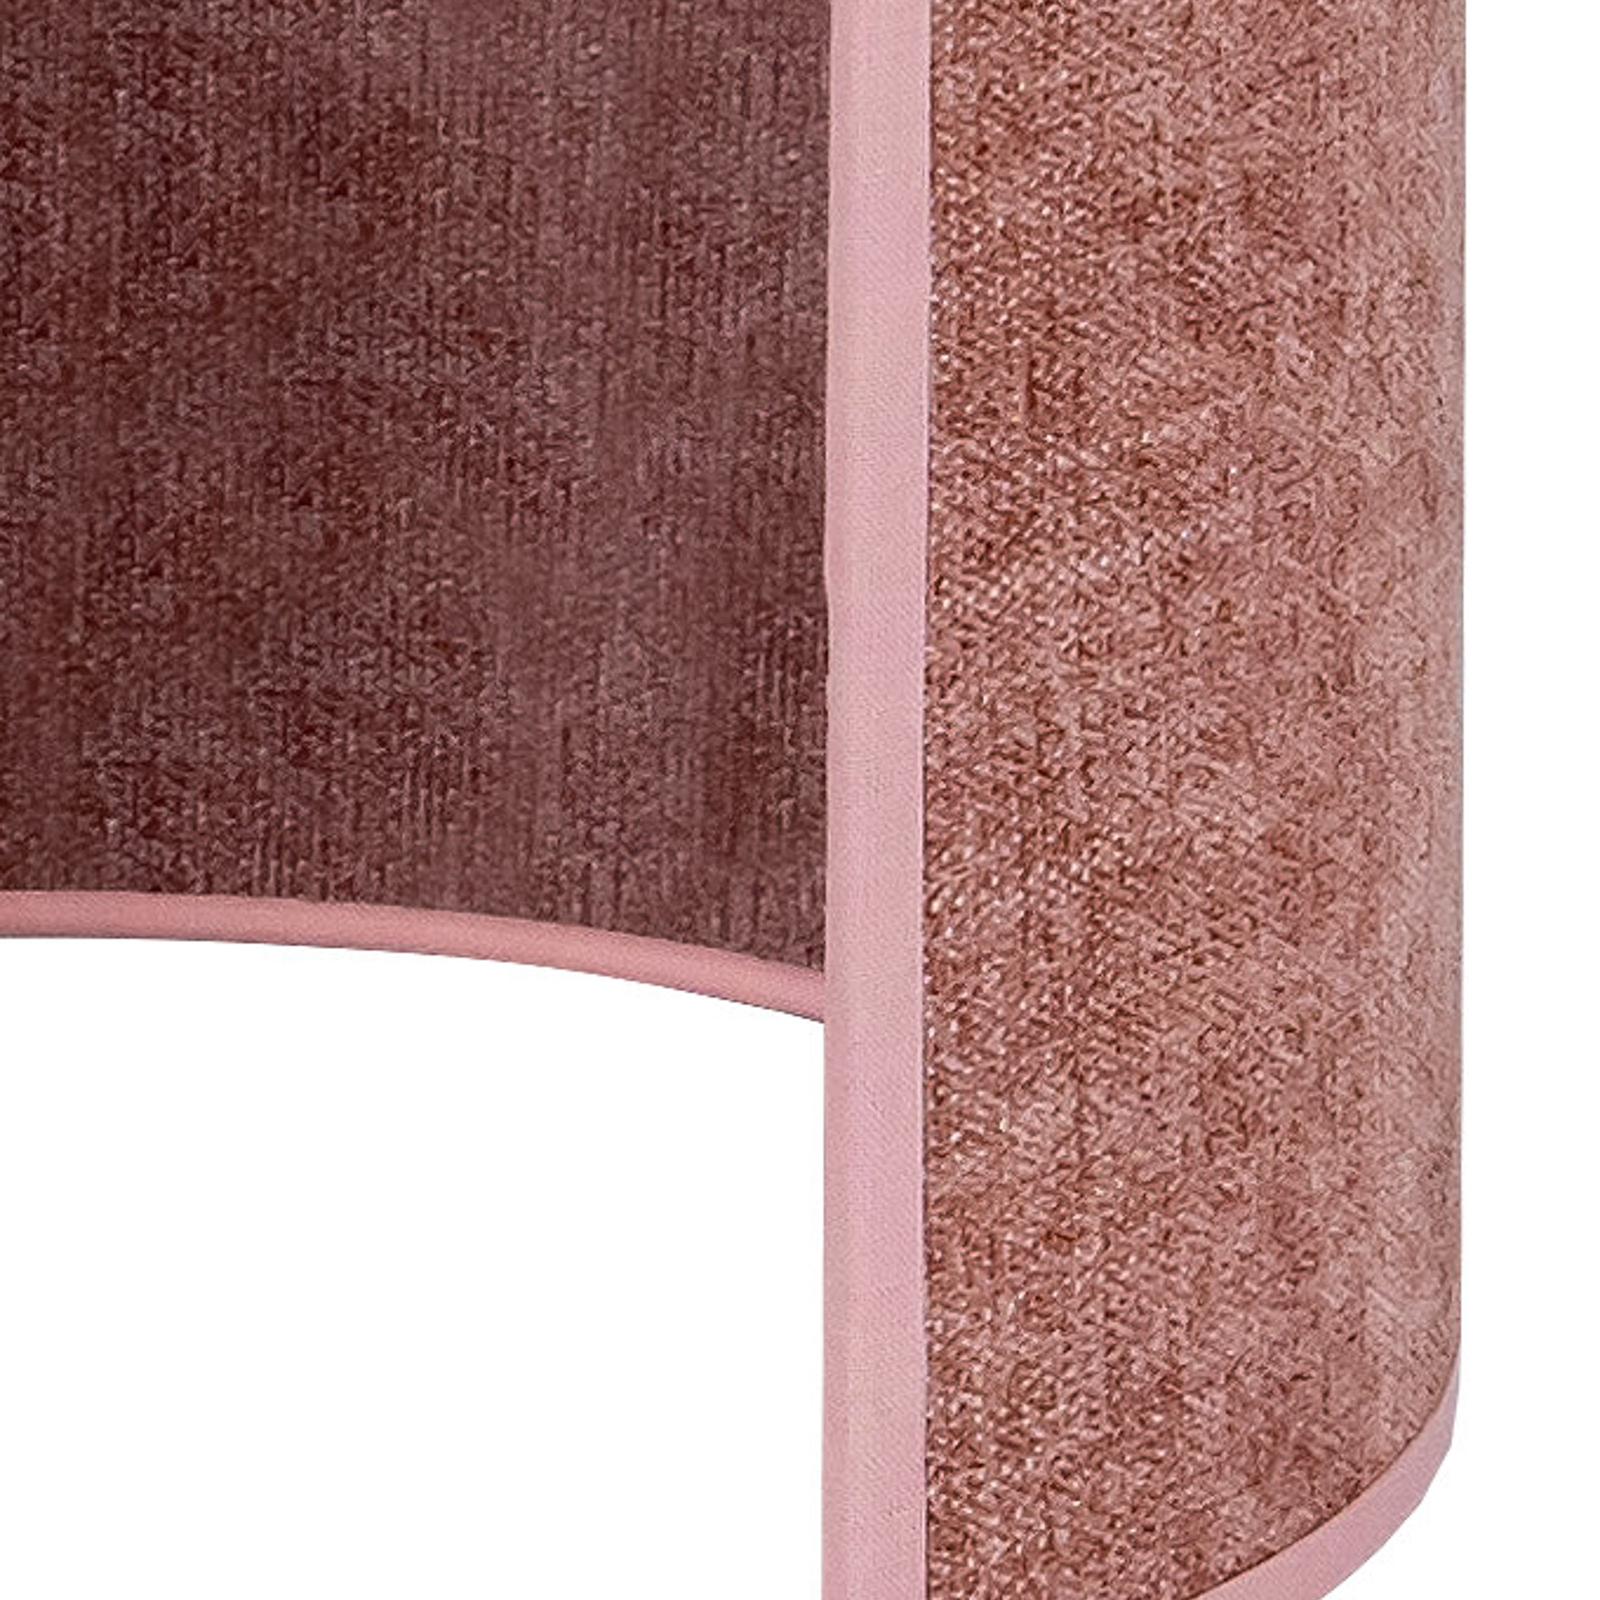 Wandlamp Euluna Celine, roze, chenille stof, hoogte 24 cm